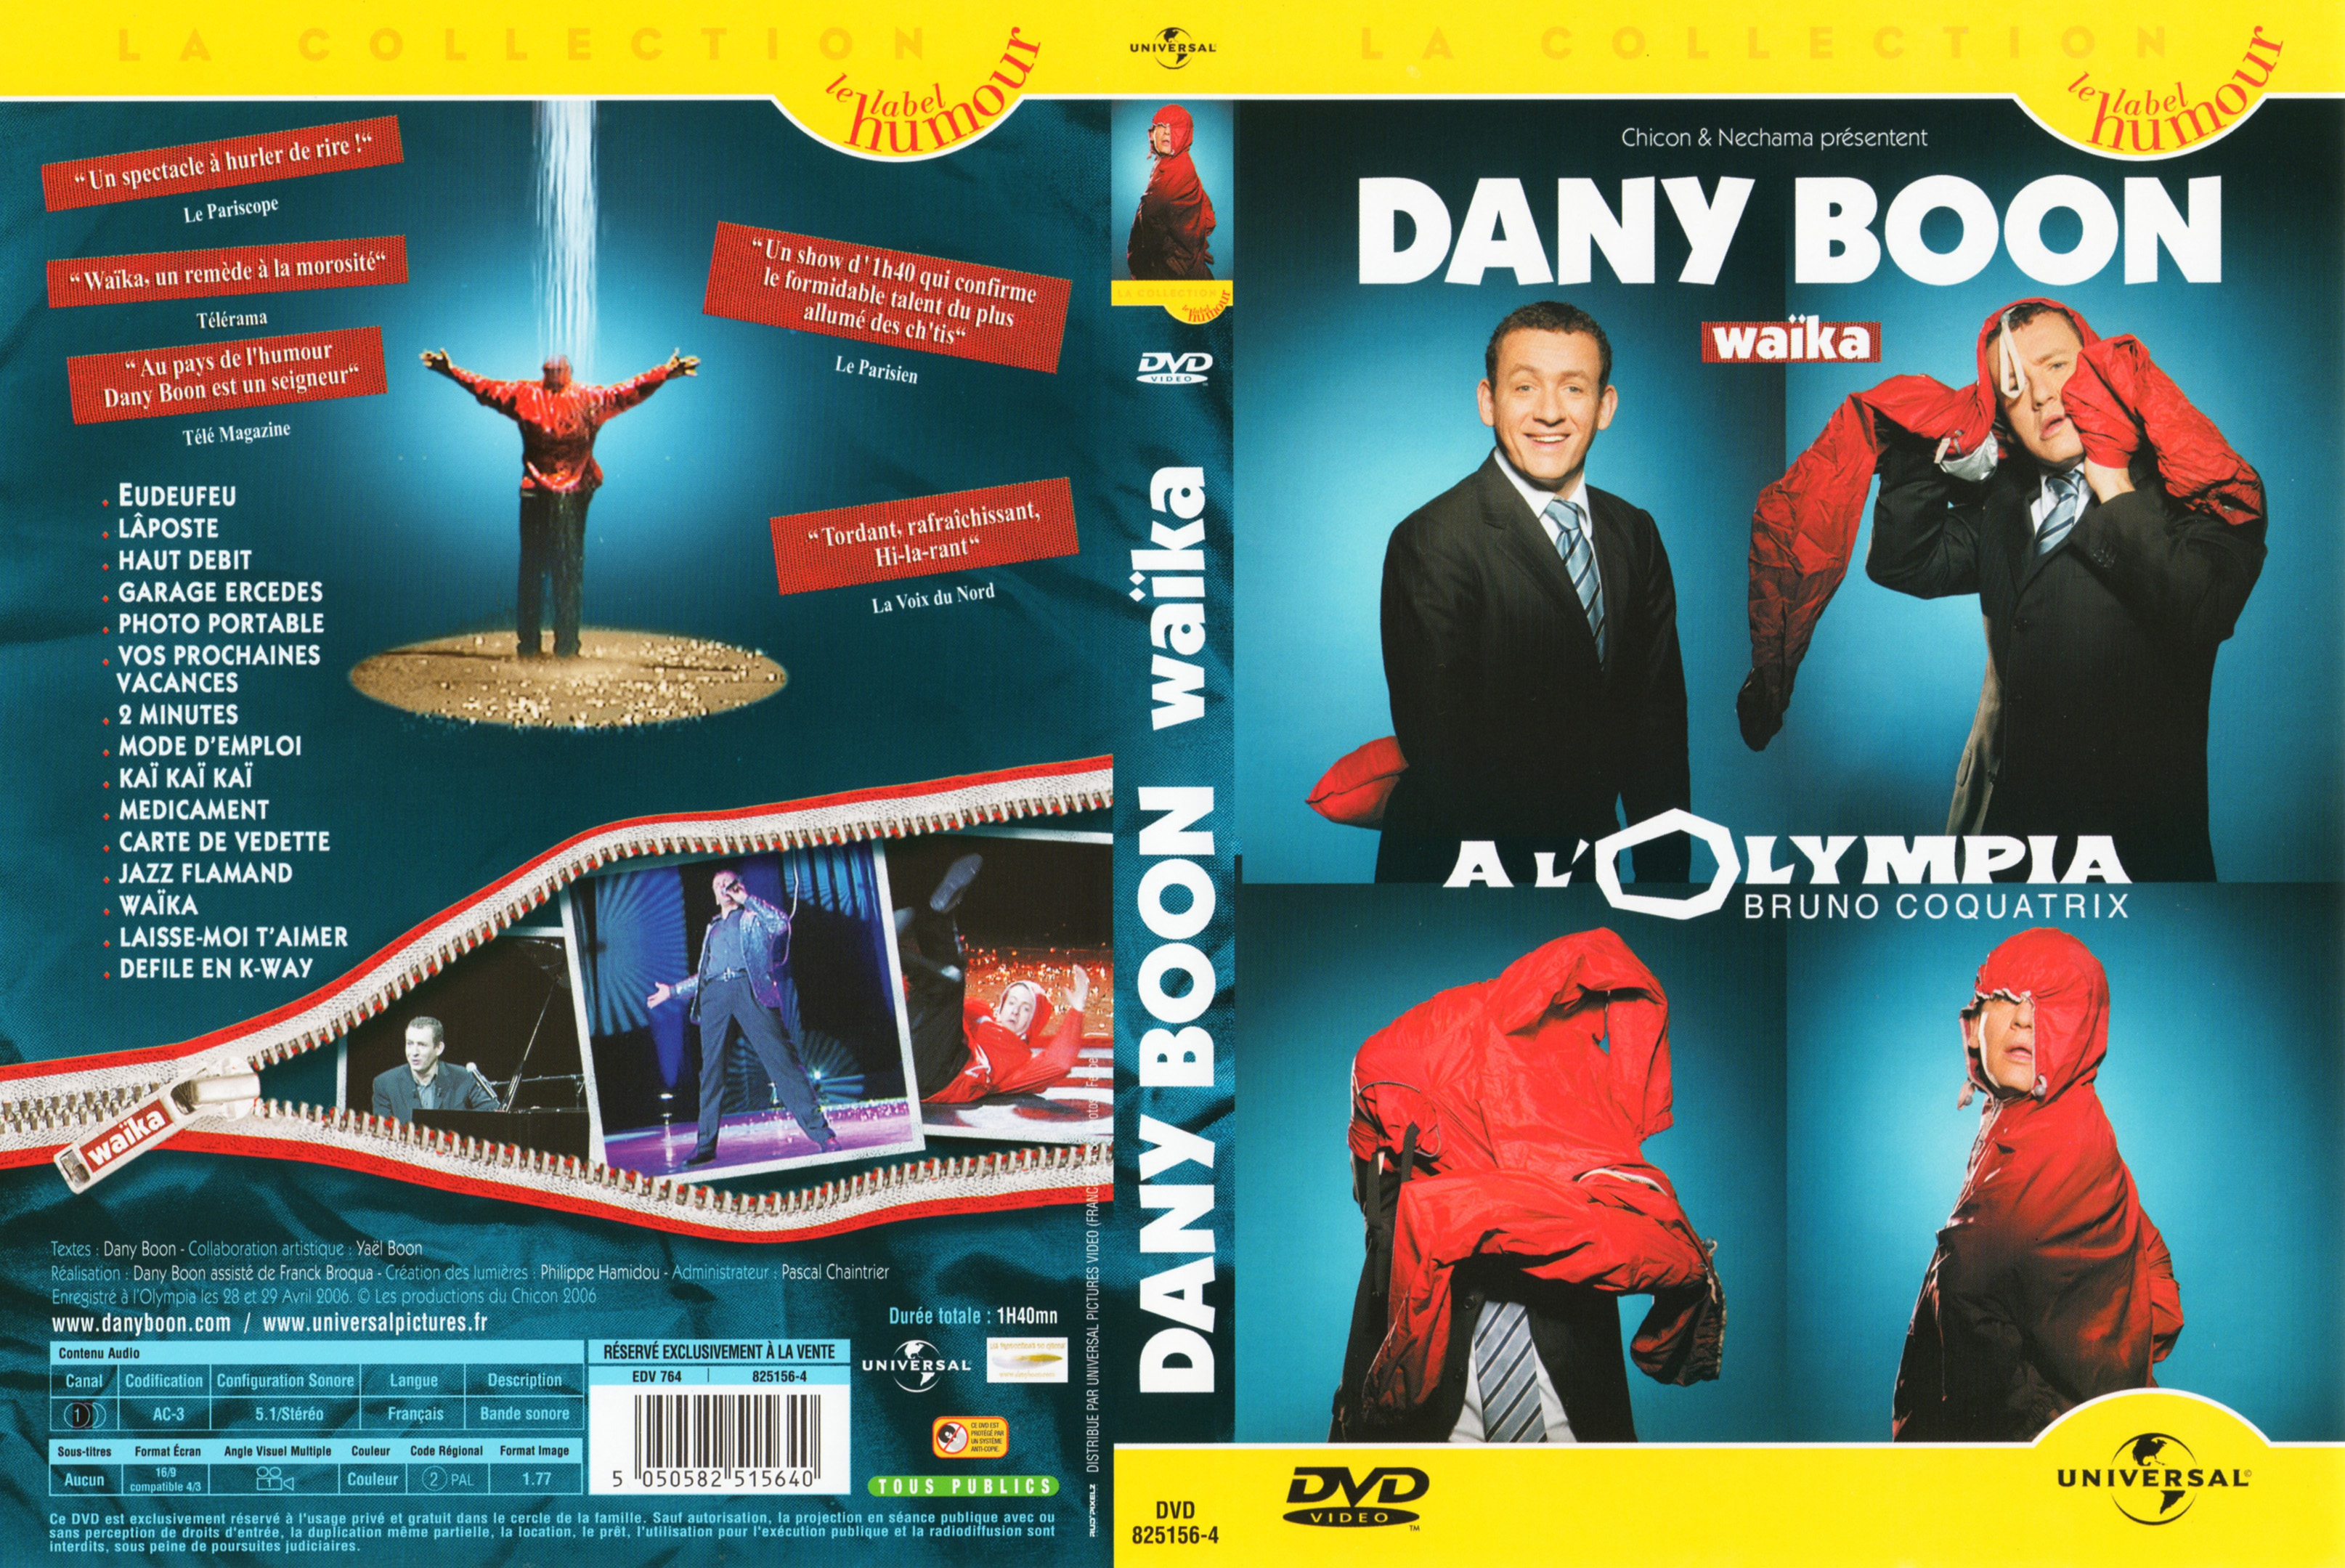 Jaquette DVD Dany Boon Waika v2